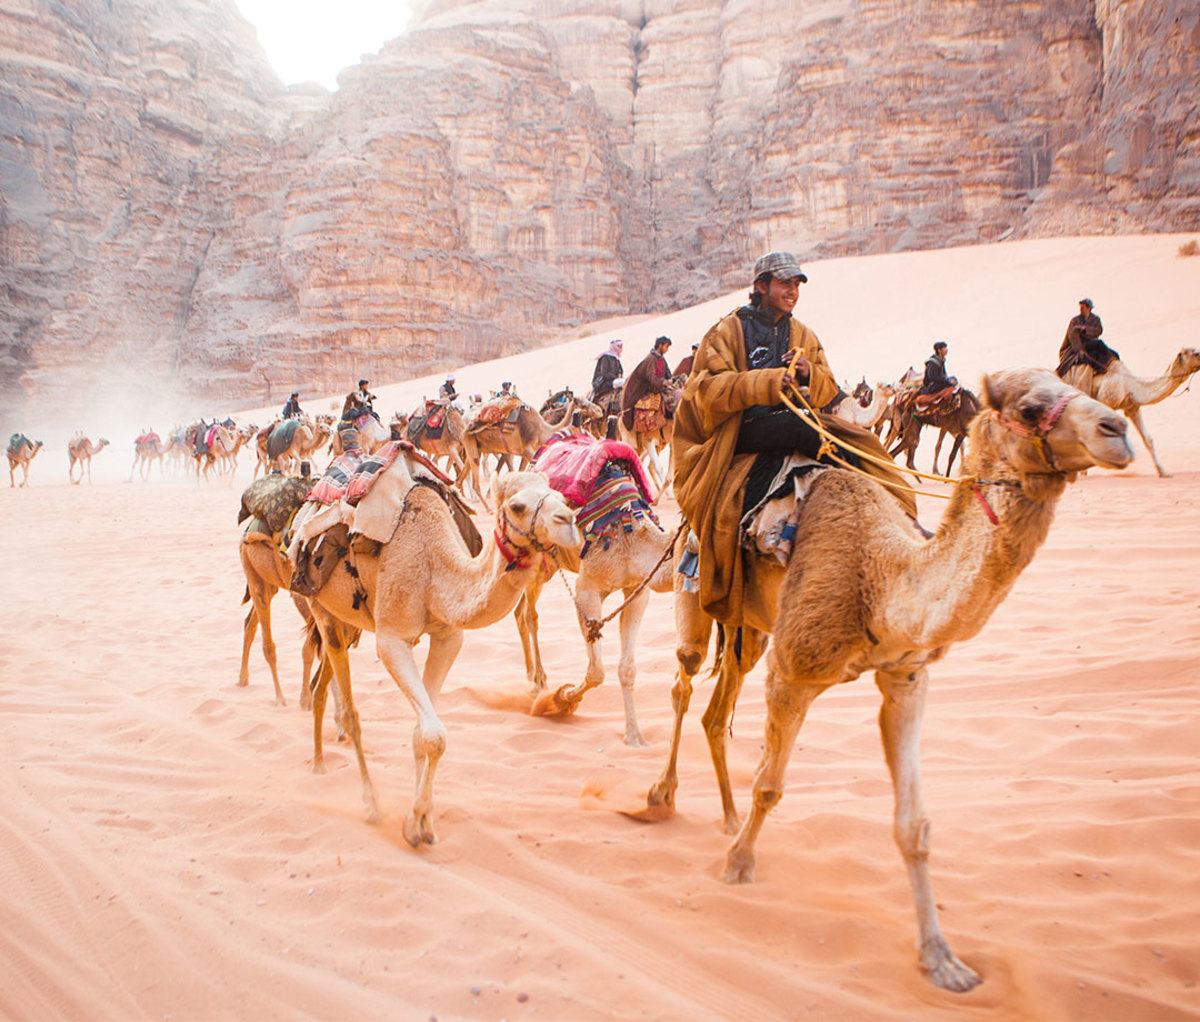 People riding camels in Wadi Rum, Jordan